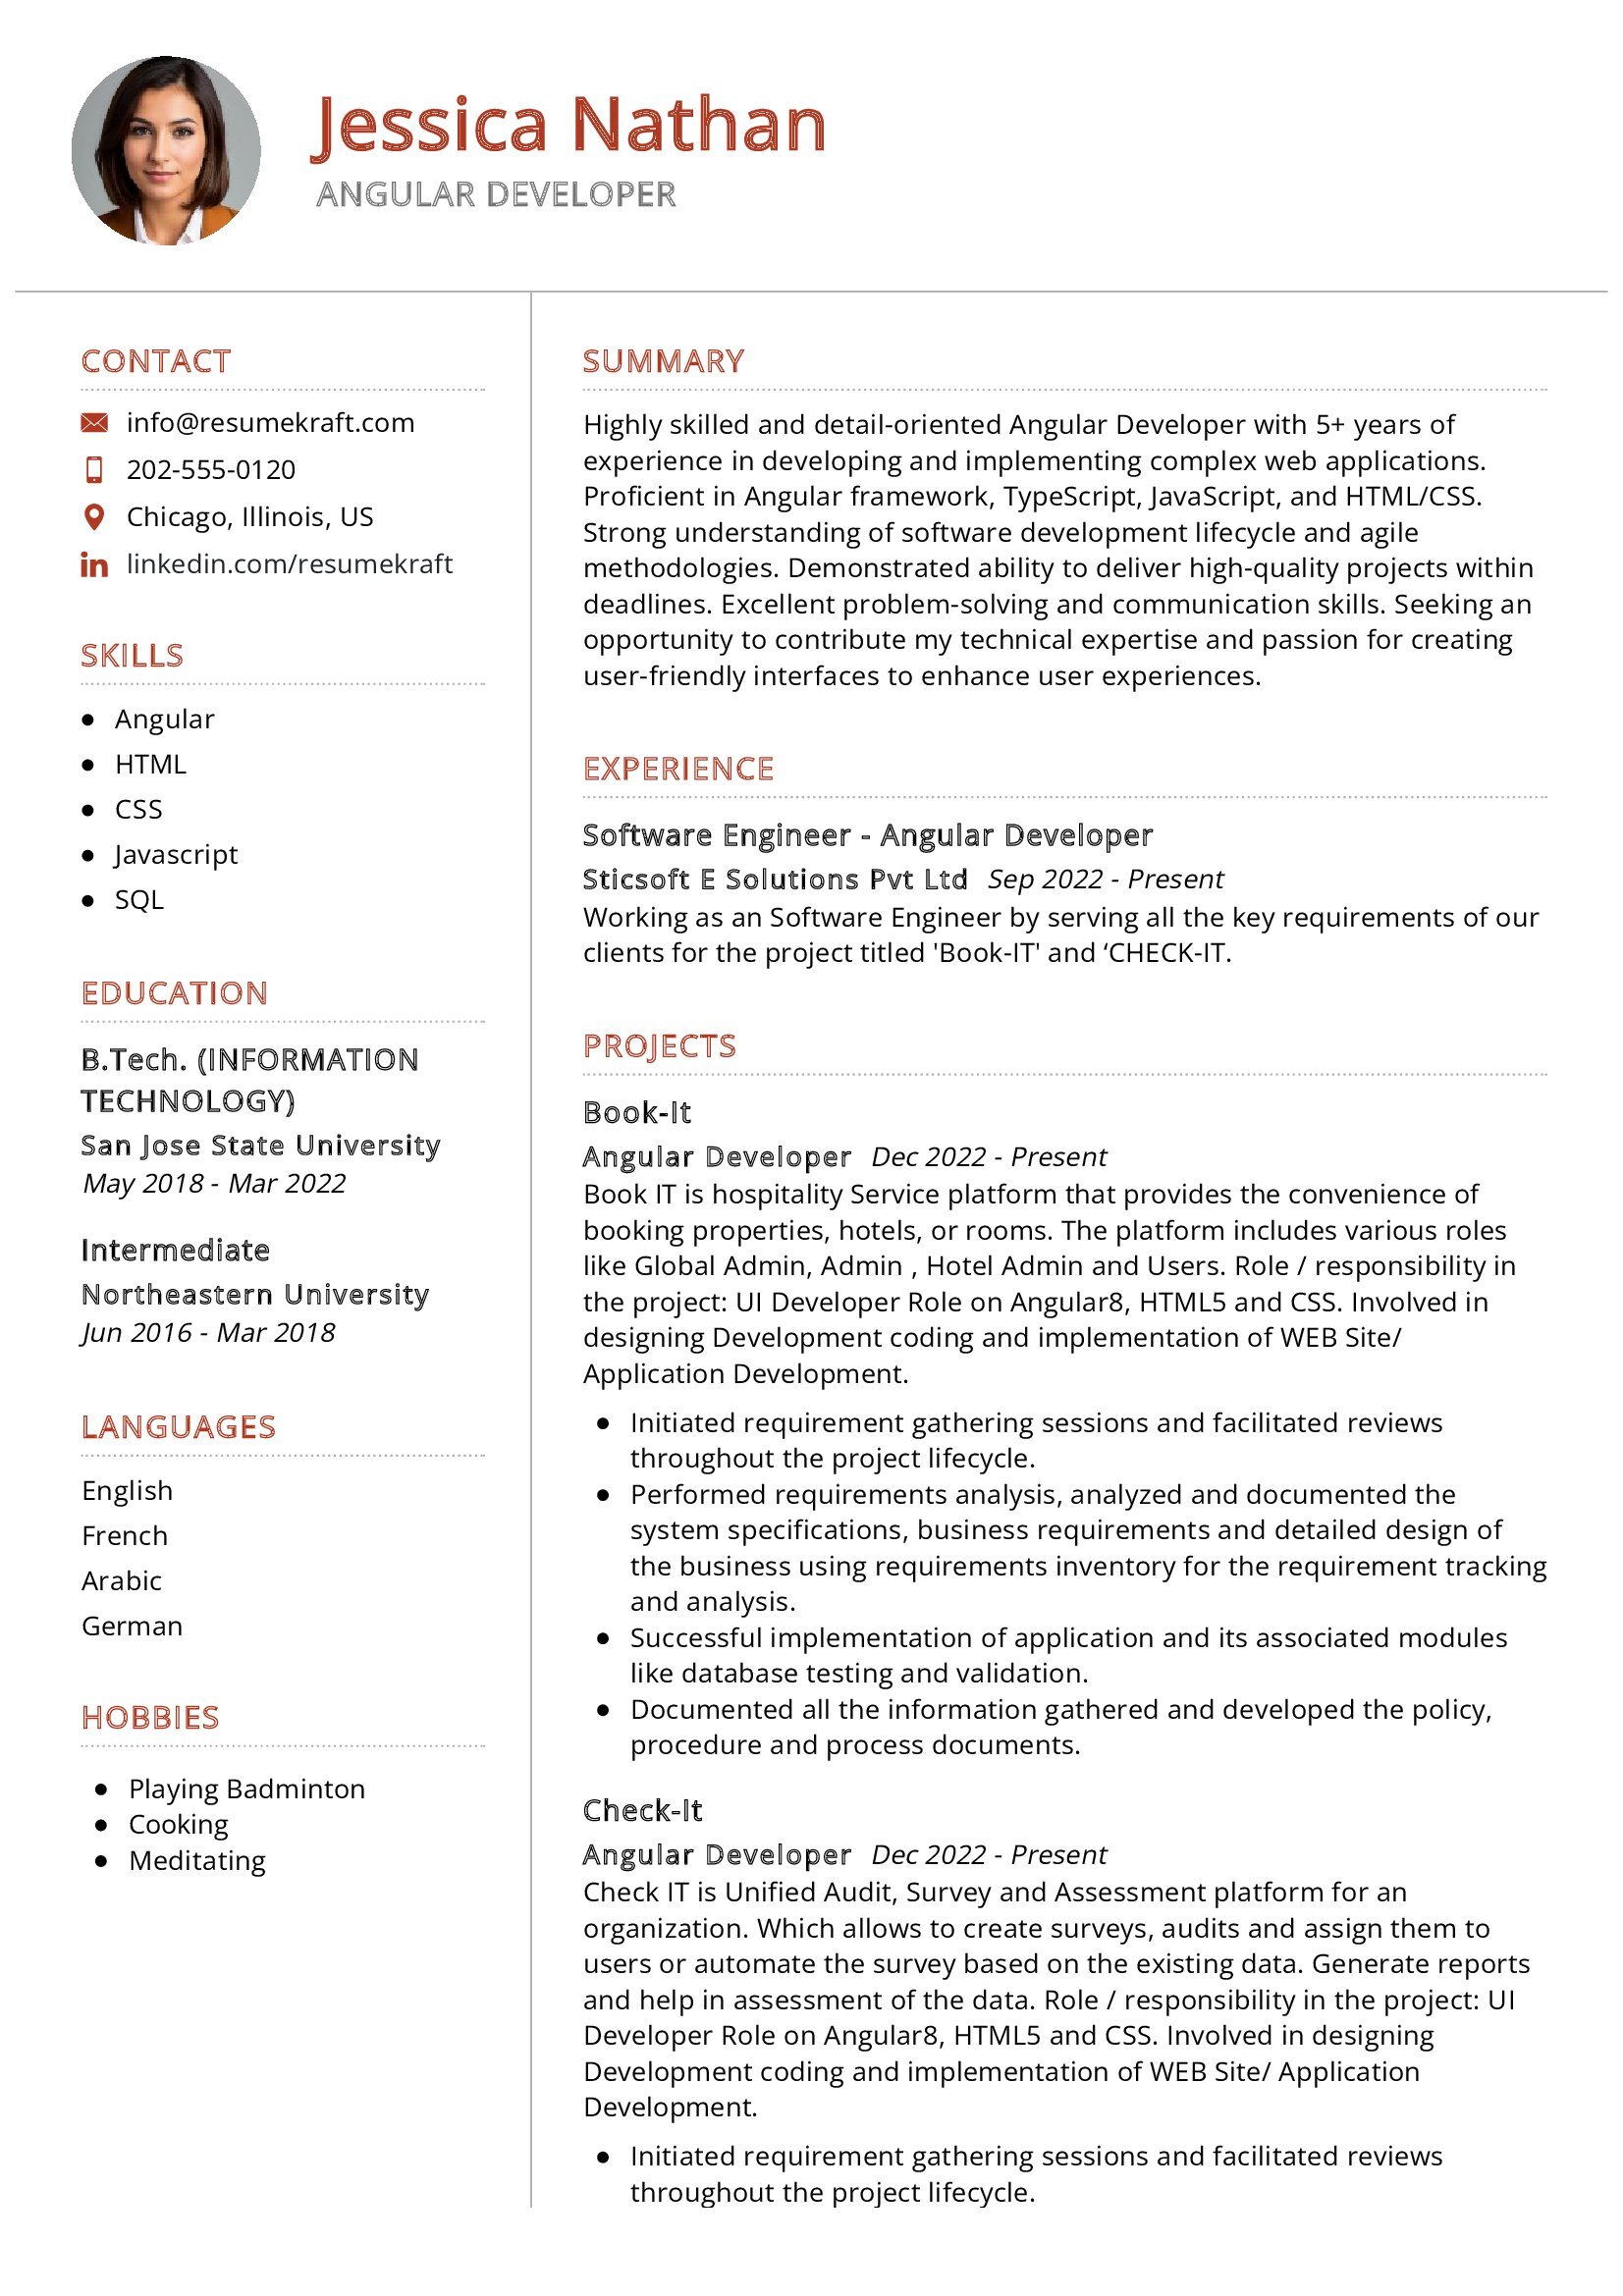 professional summary in resume for angular developer